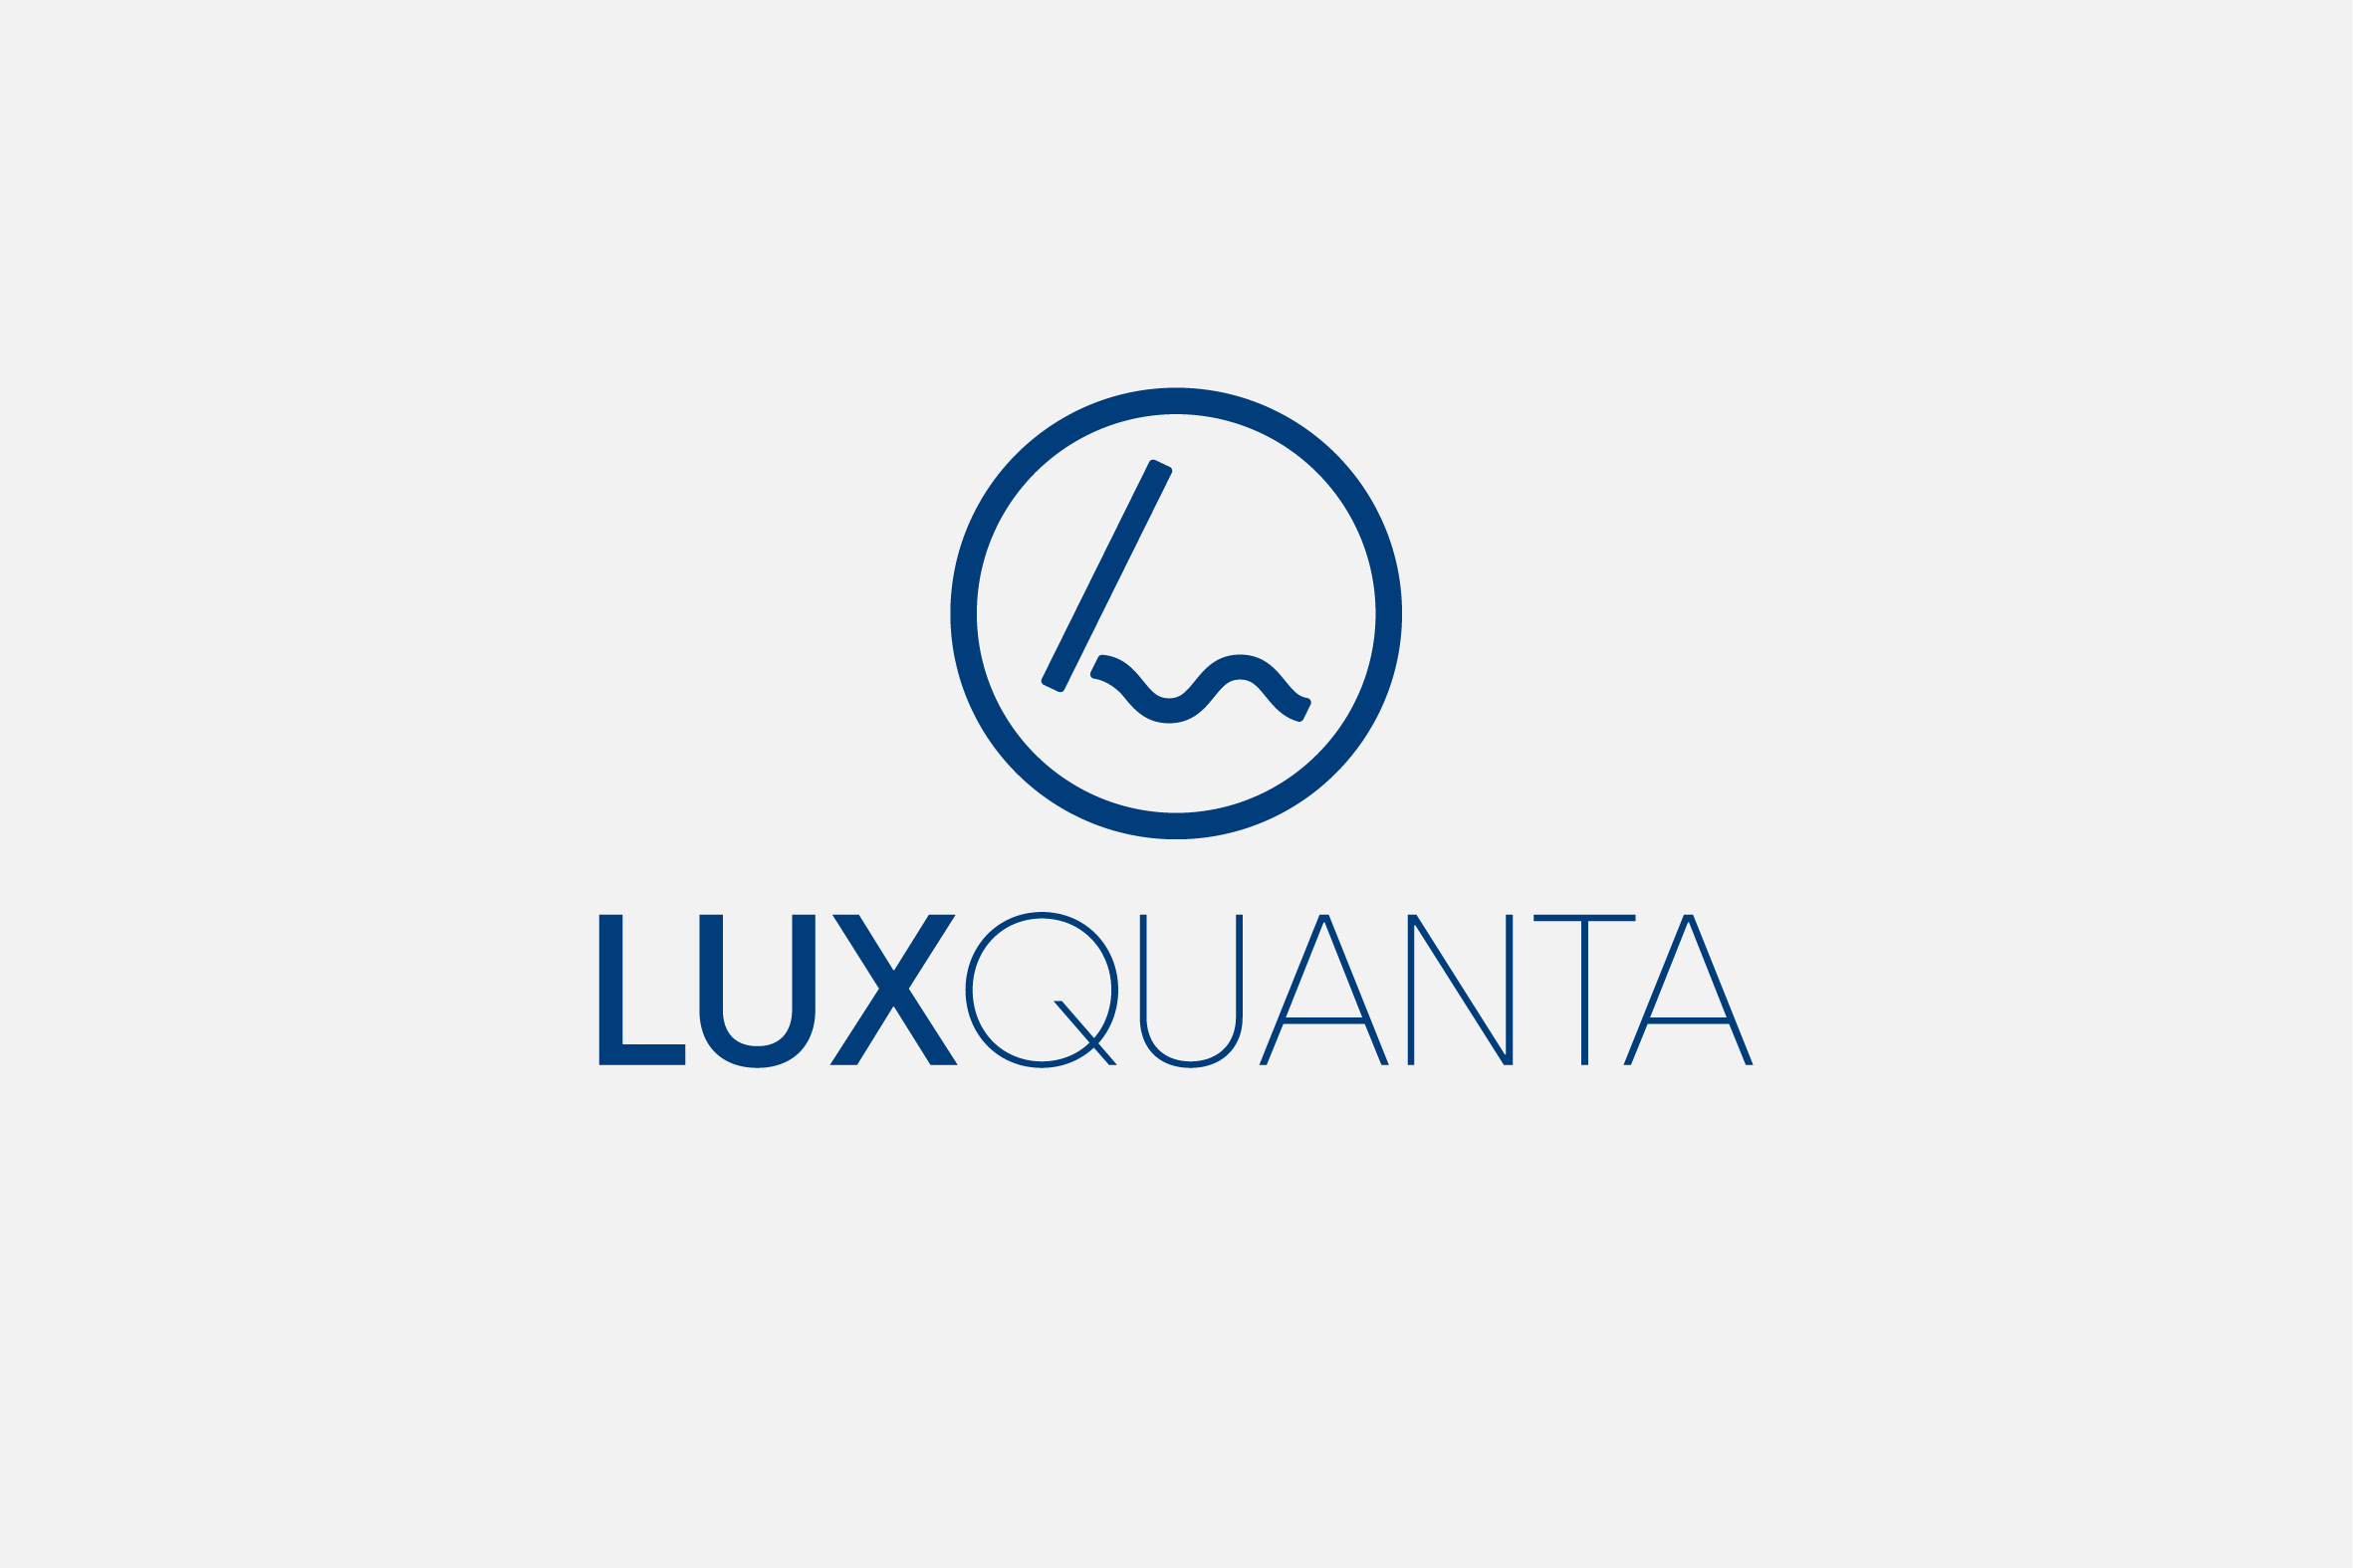 Luxquanta - Графический дизайн для науки и технологий